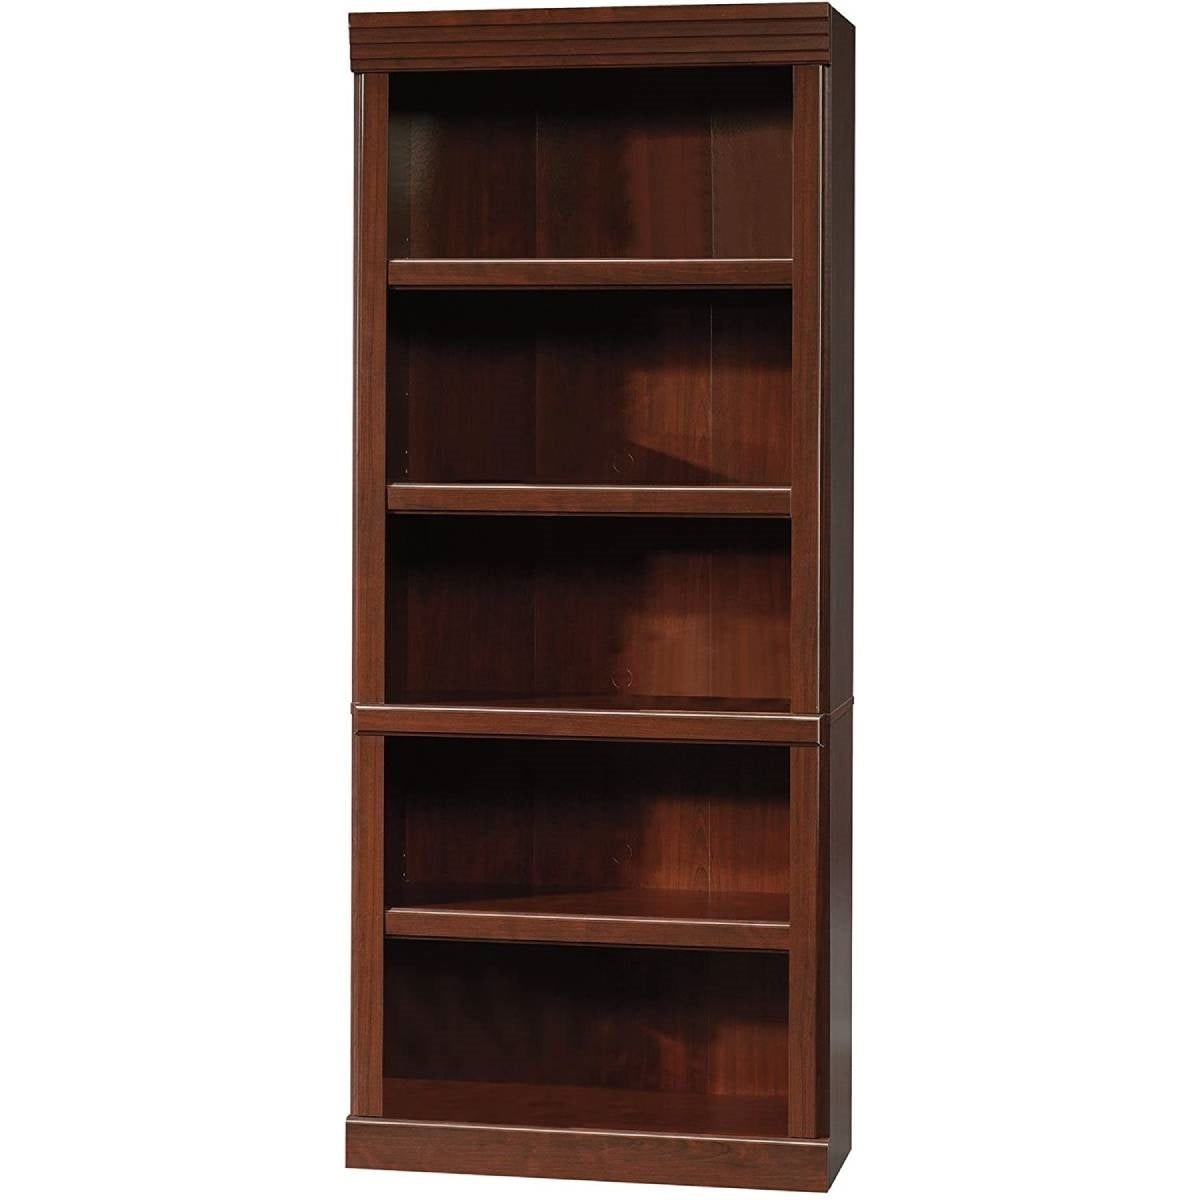 71-inch High 5-Shelf Wooden Bookcase in Cherry Finish